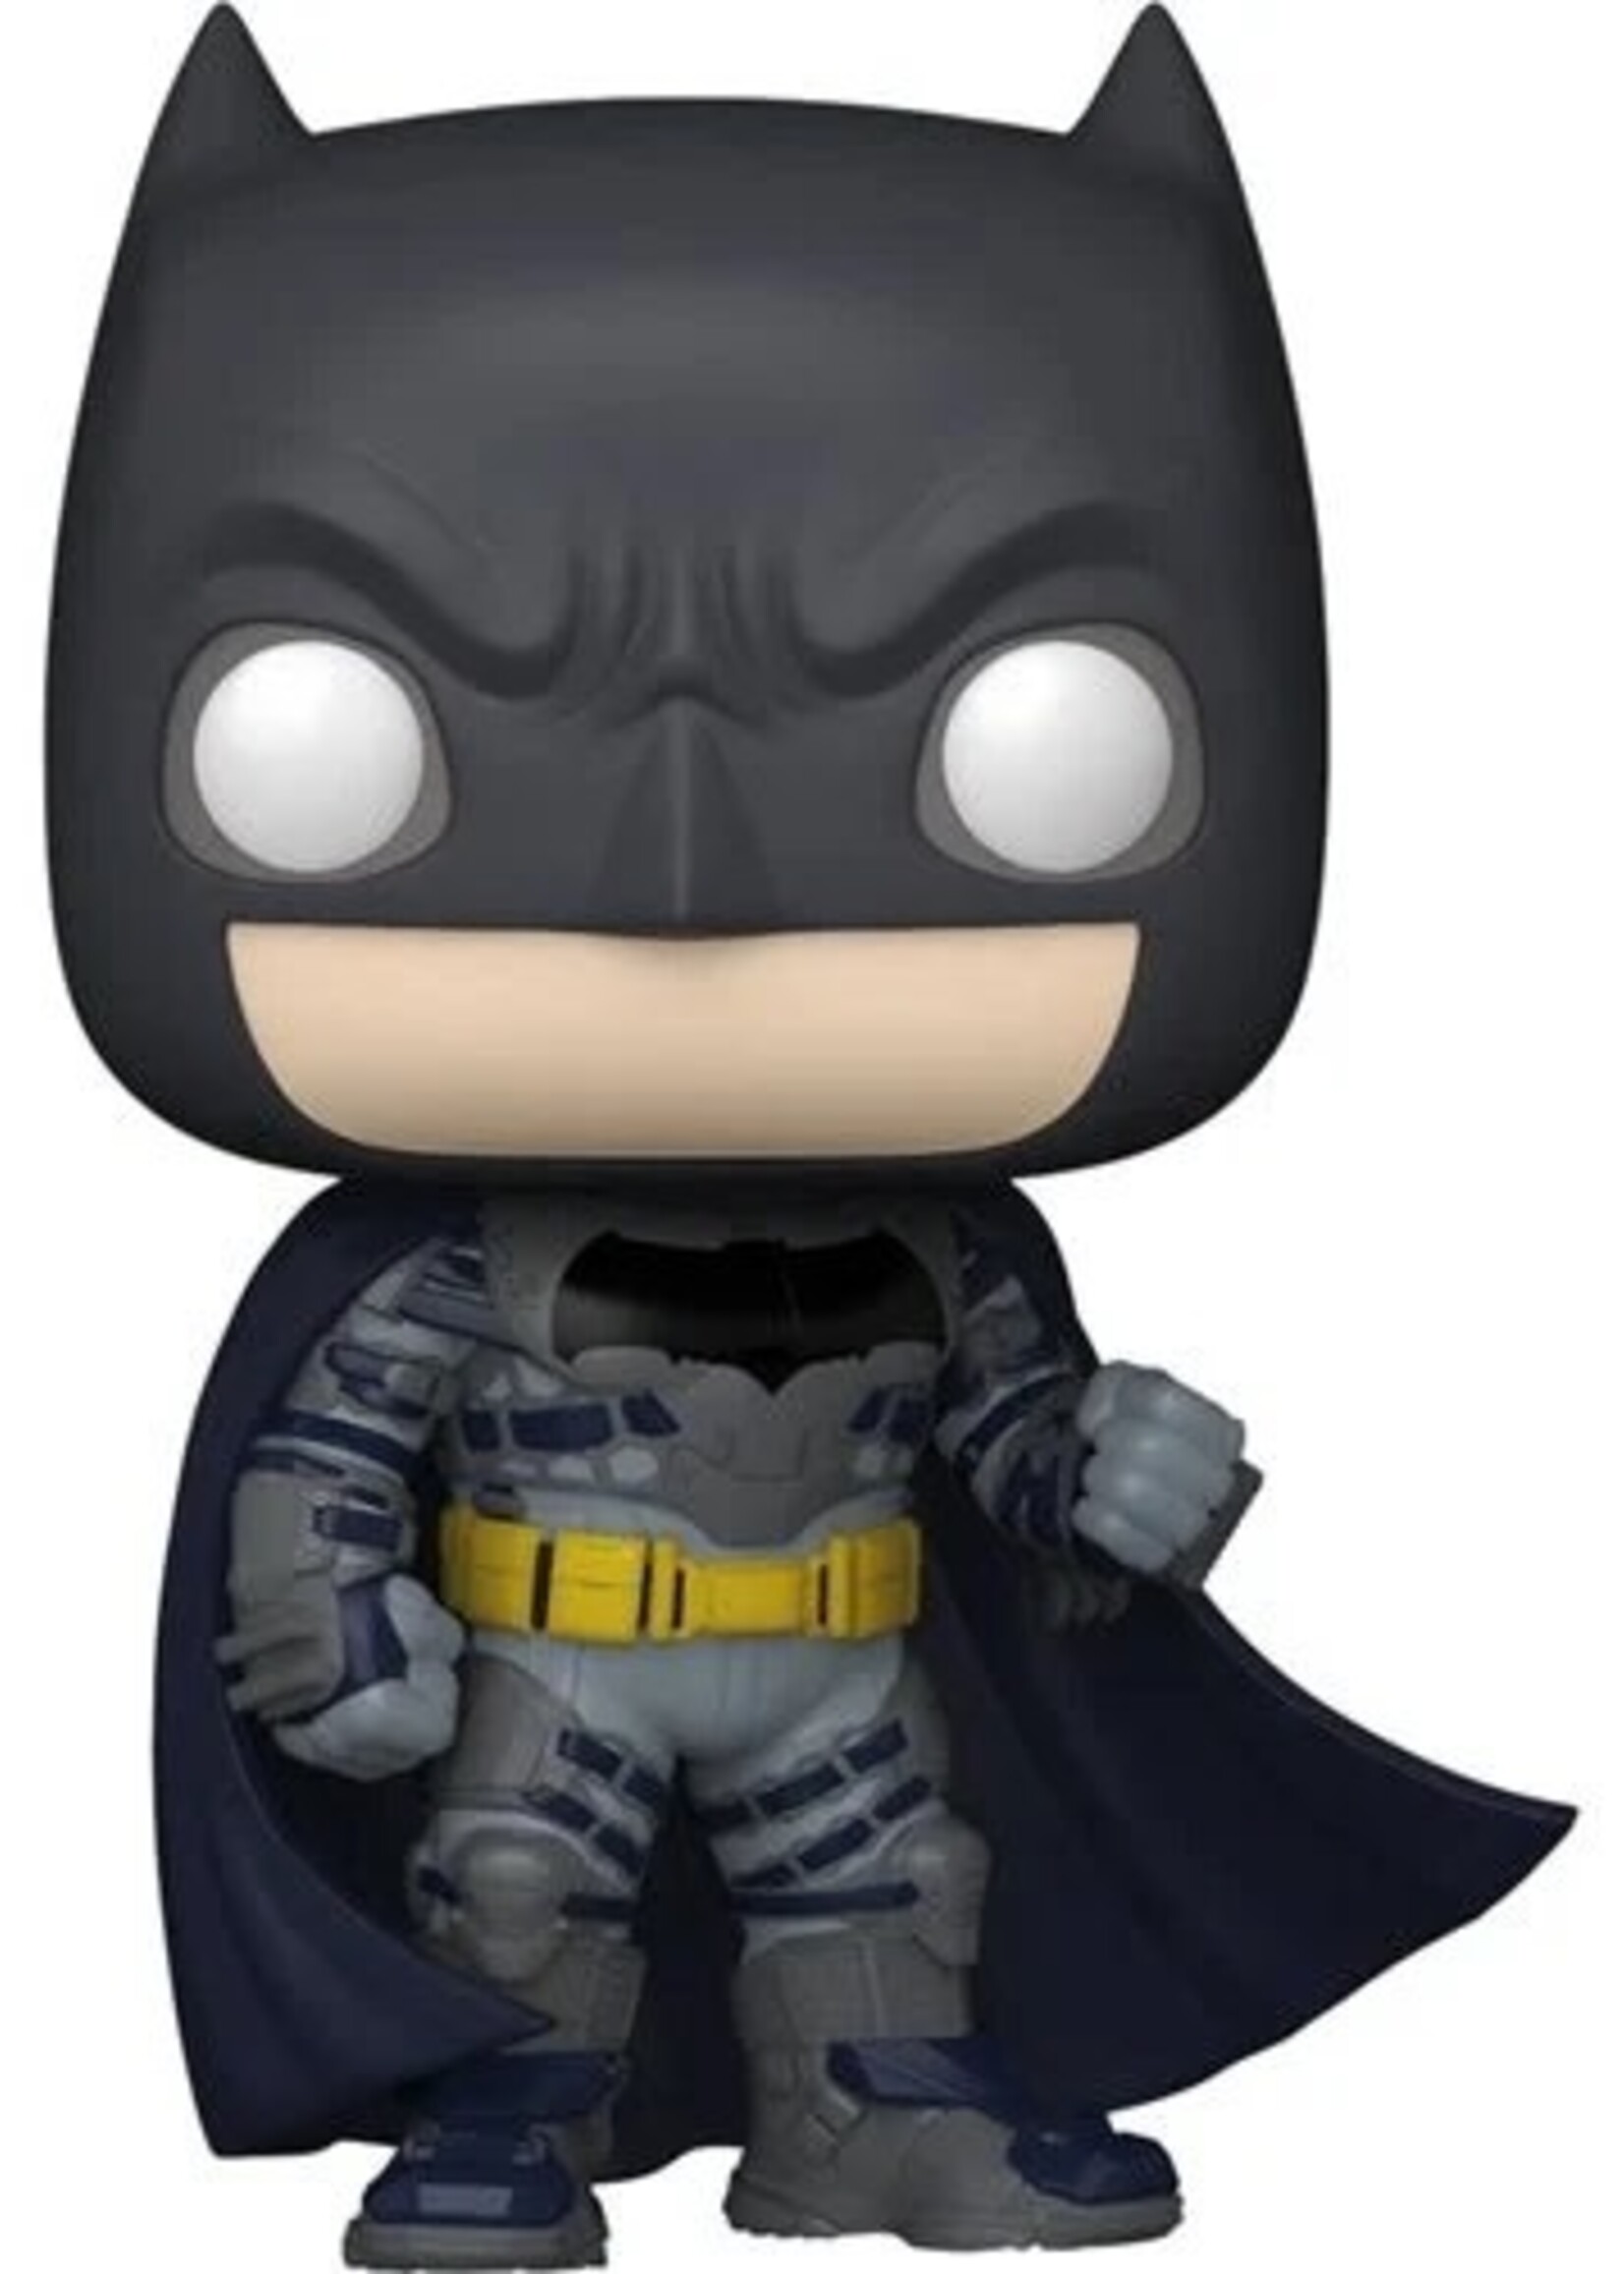 Buy Pop! Batman in Wing Suit at Funko.